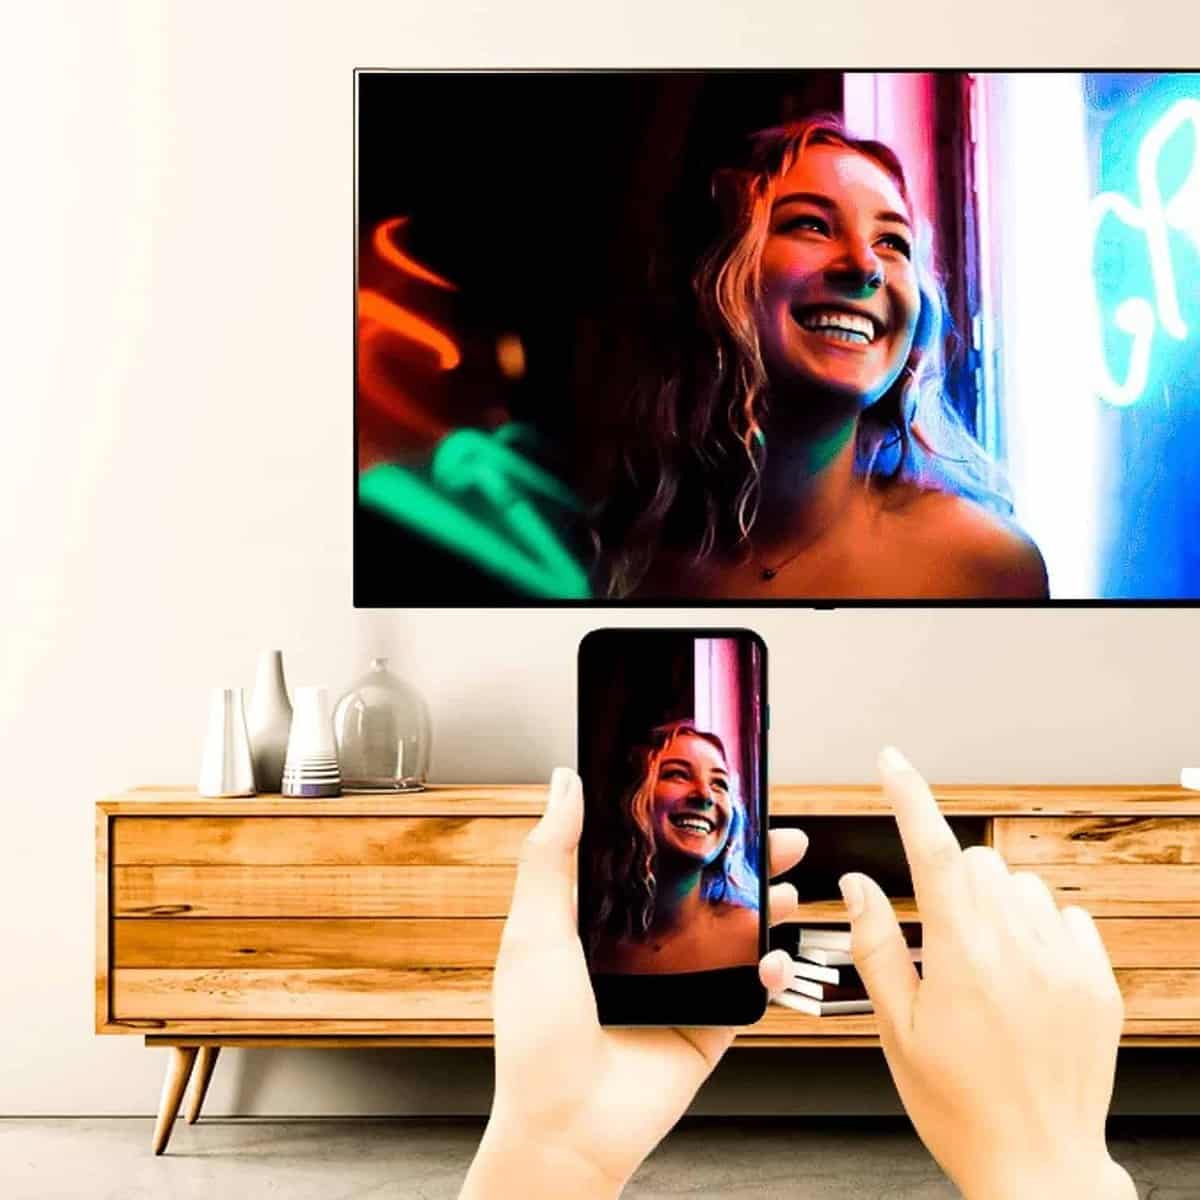 pantalla del celular y smart tv